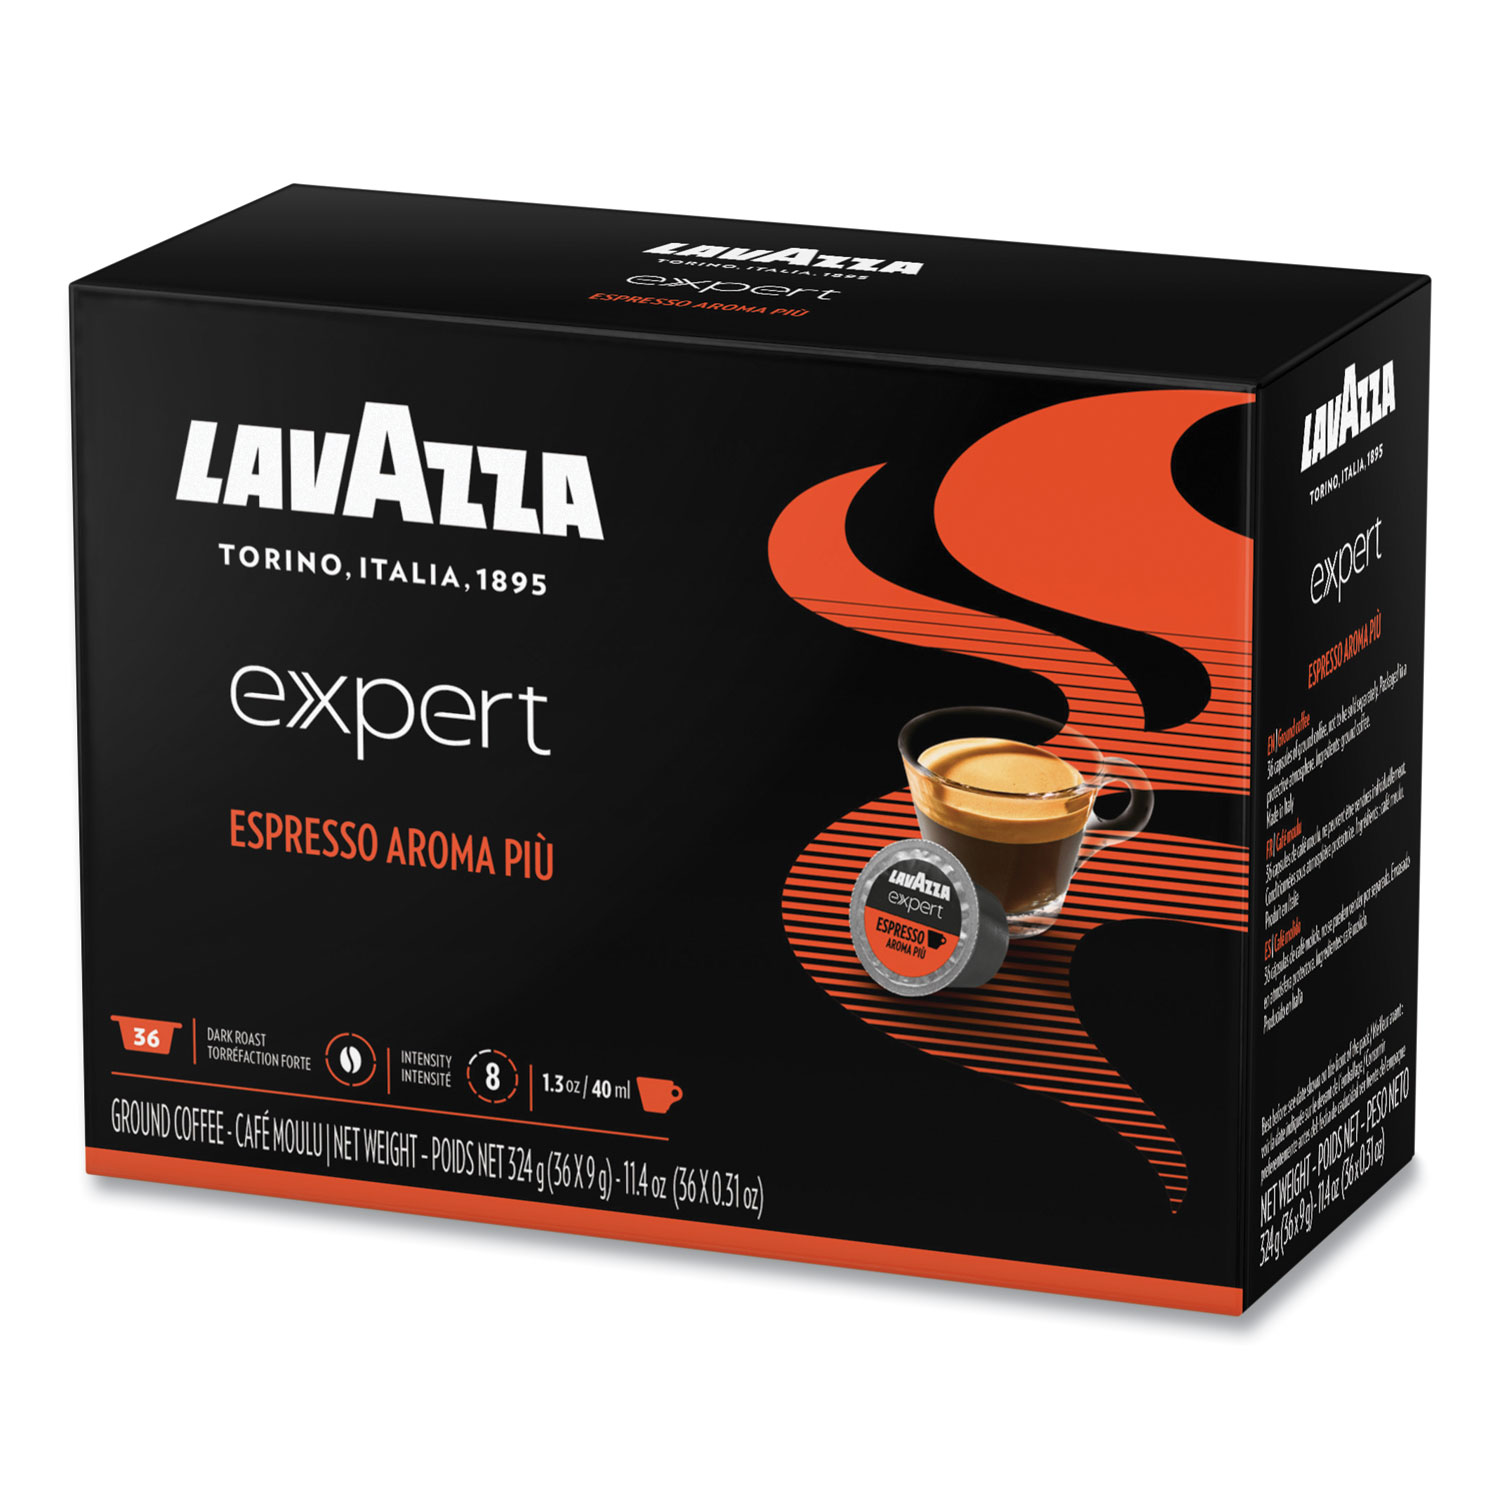  Lavazza 2259 Expert Capsules, Espresso Aroma Piu, 0.31 oz, 36/Box (LAV2259) 